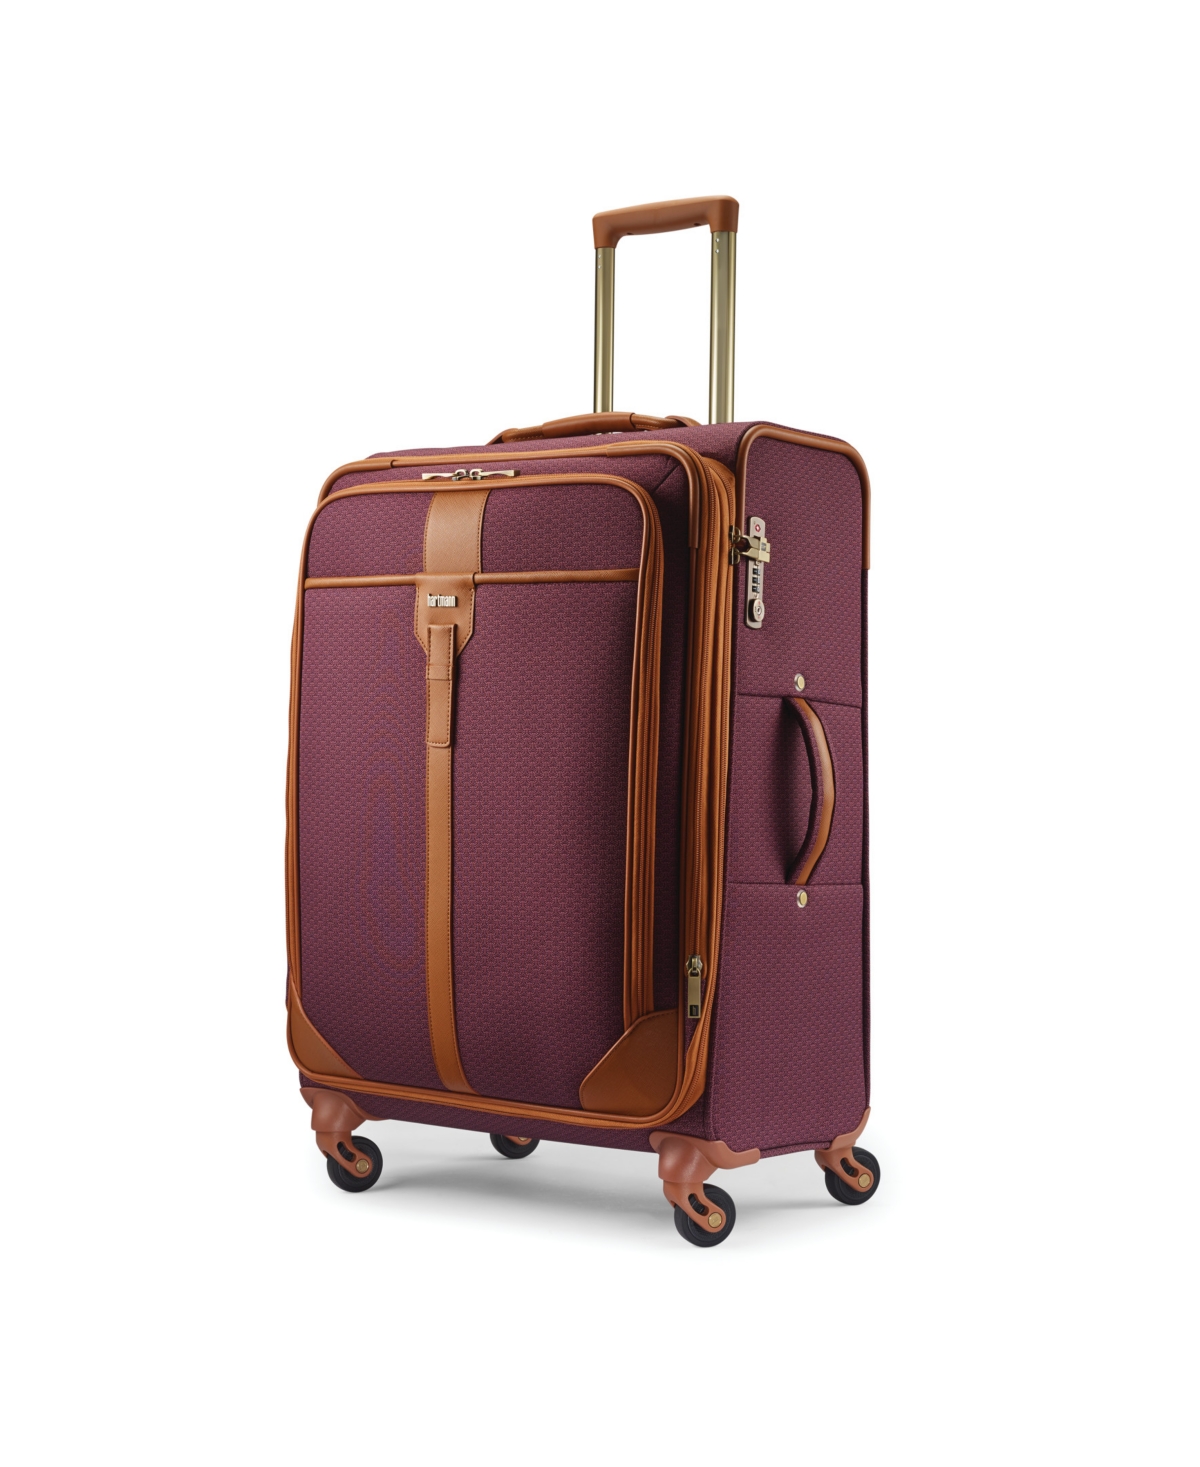 Hartmann Luxe Medium Journey Spinner Suitcase In Burgundy/tan